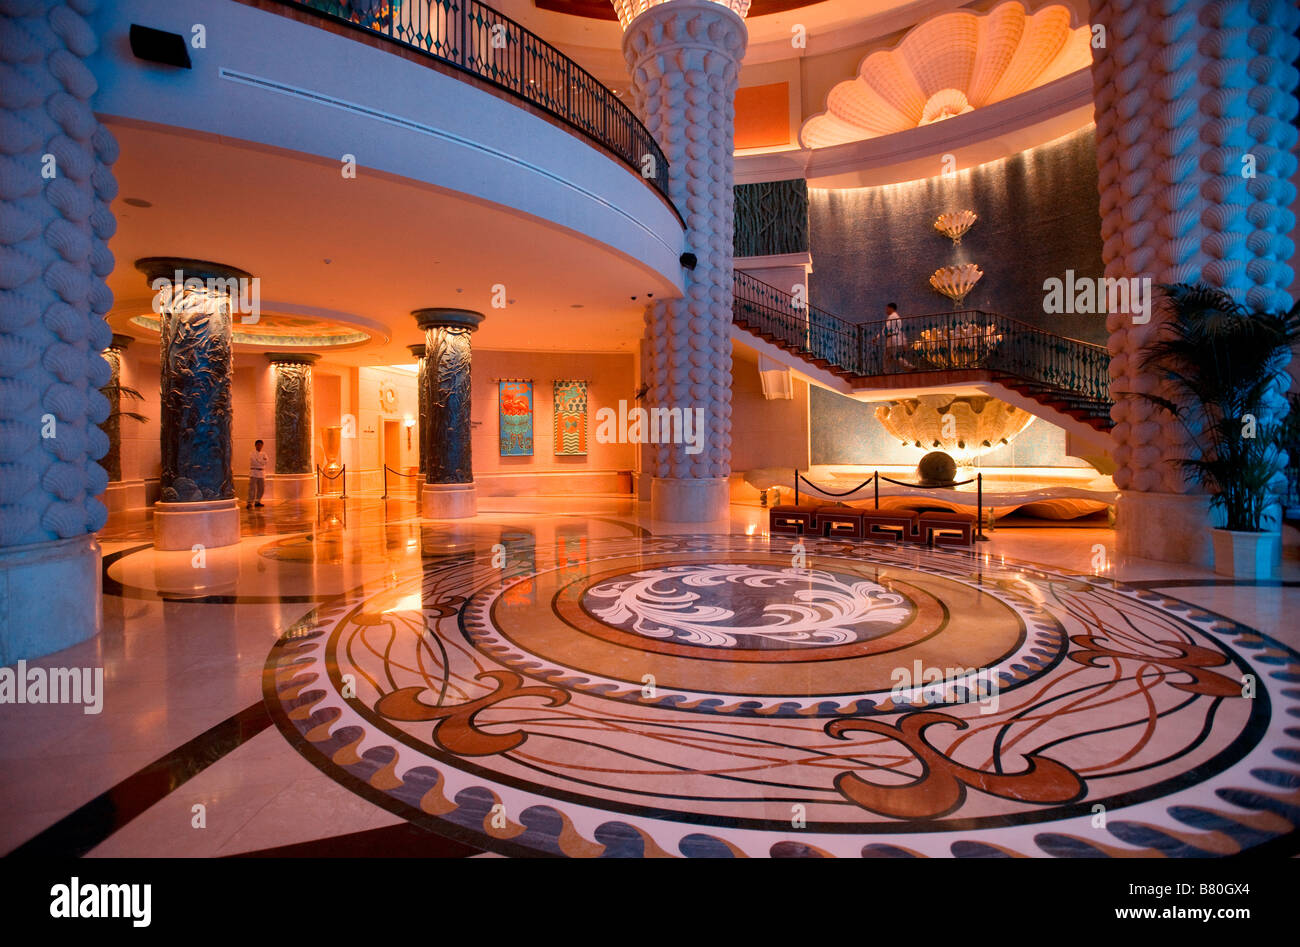 the lobby of the Atlantis hotel at palm Jumeirah Dubai Stock Photo